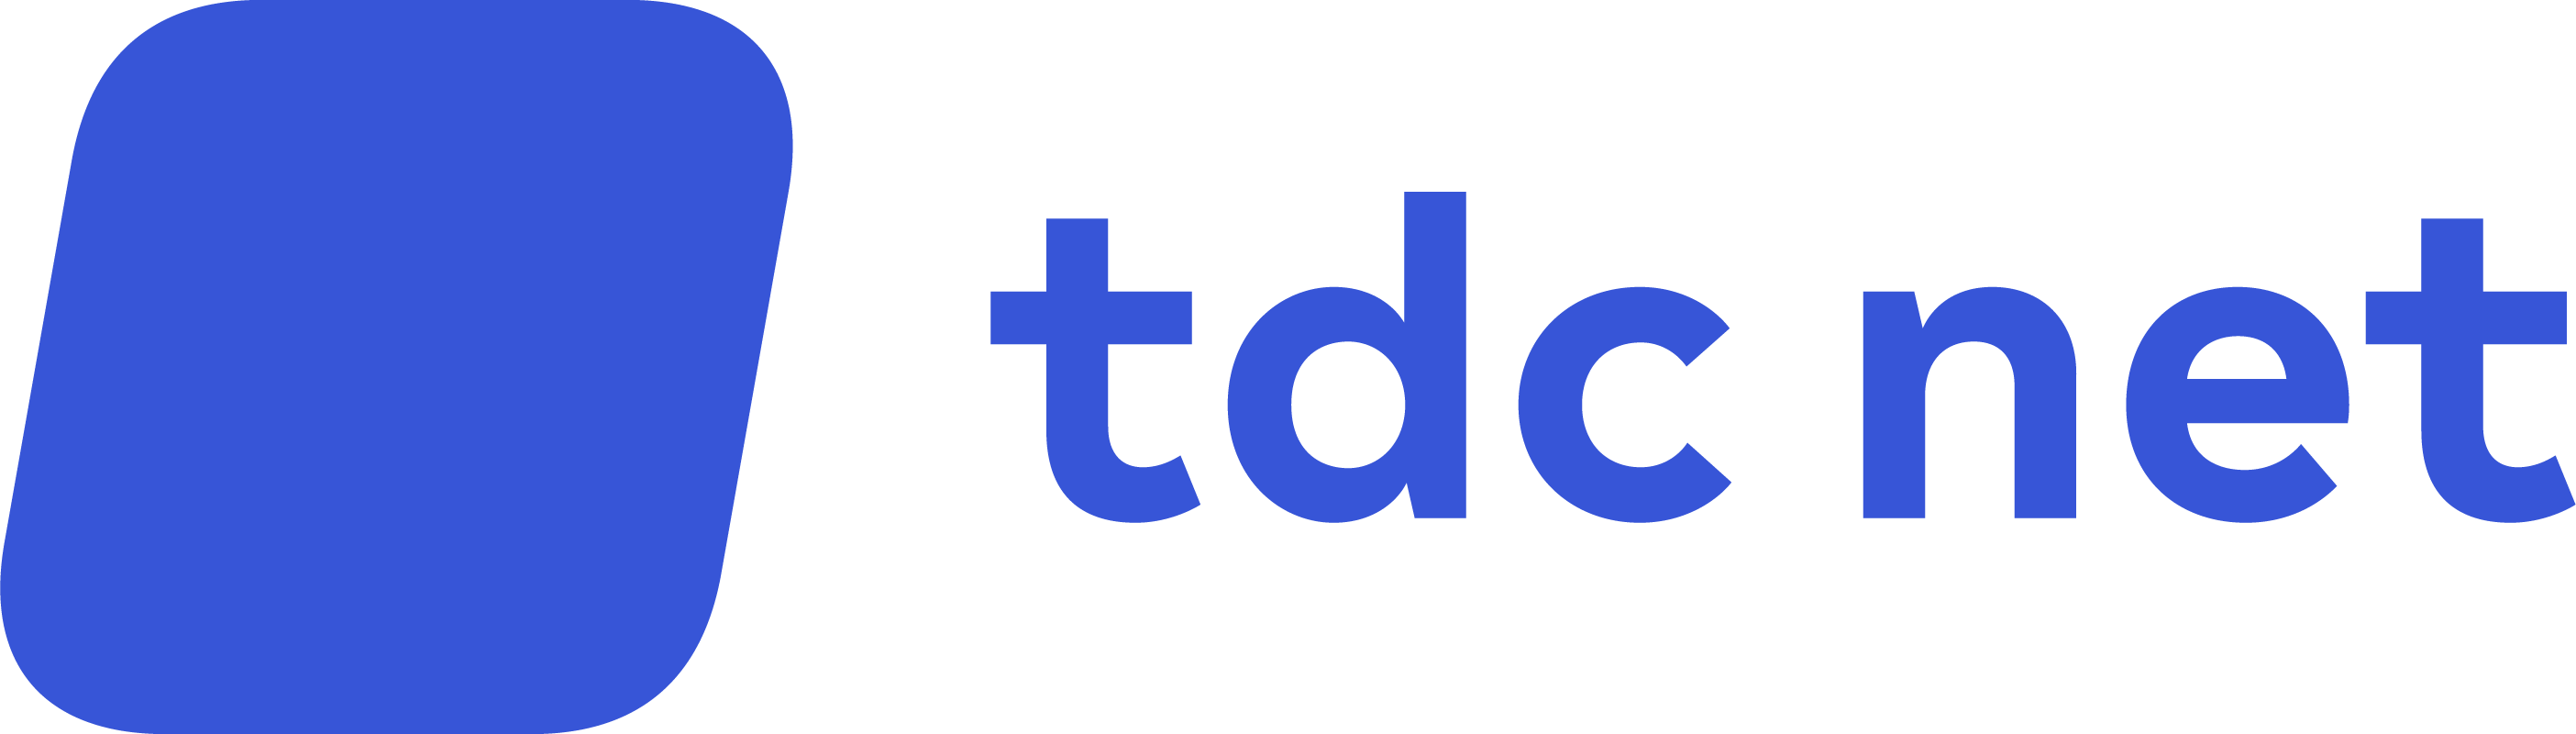 TDC